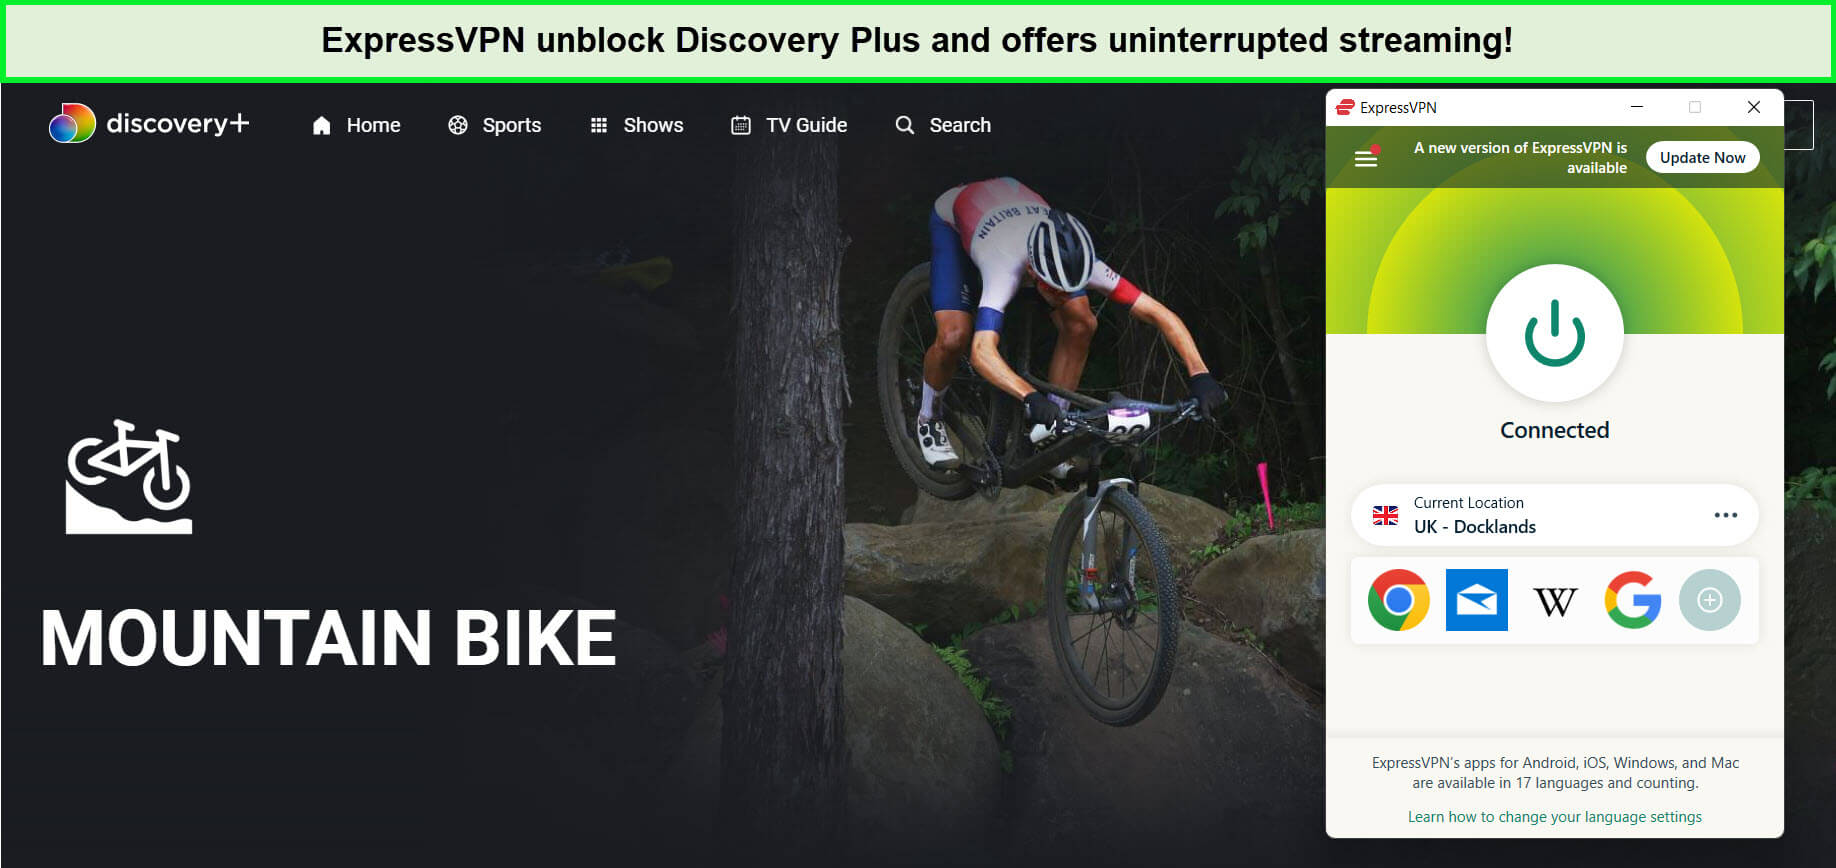 expressvpn-unblocks-uci-mountain-bike-world-series-outside-UK-discovery-plus